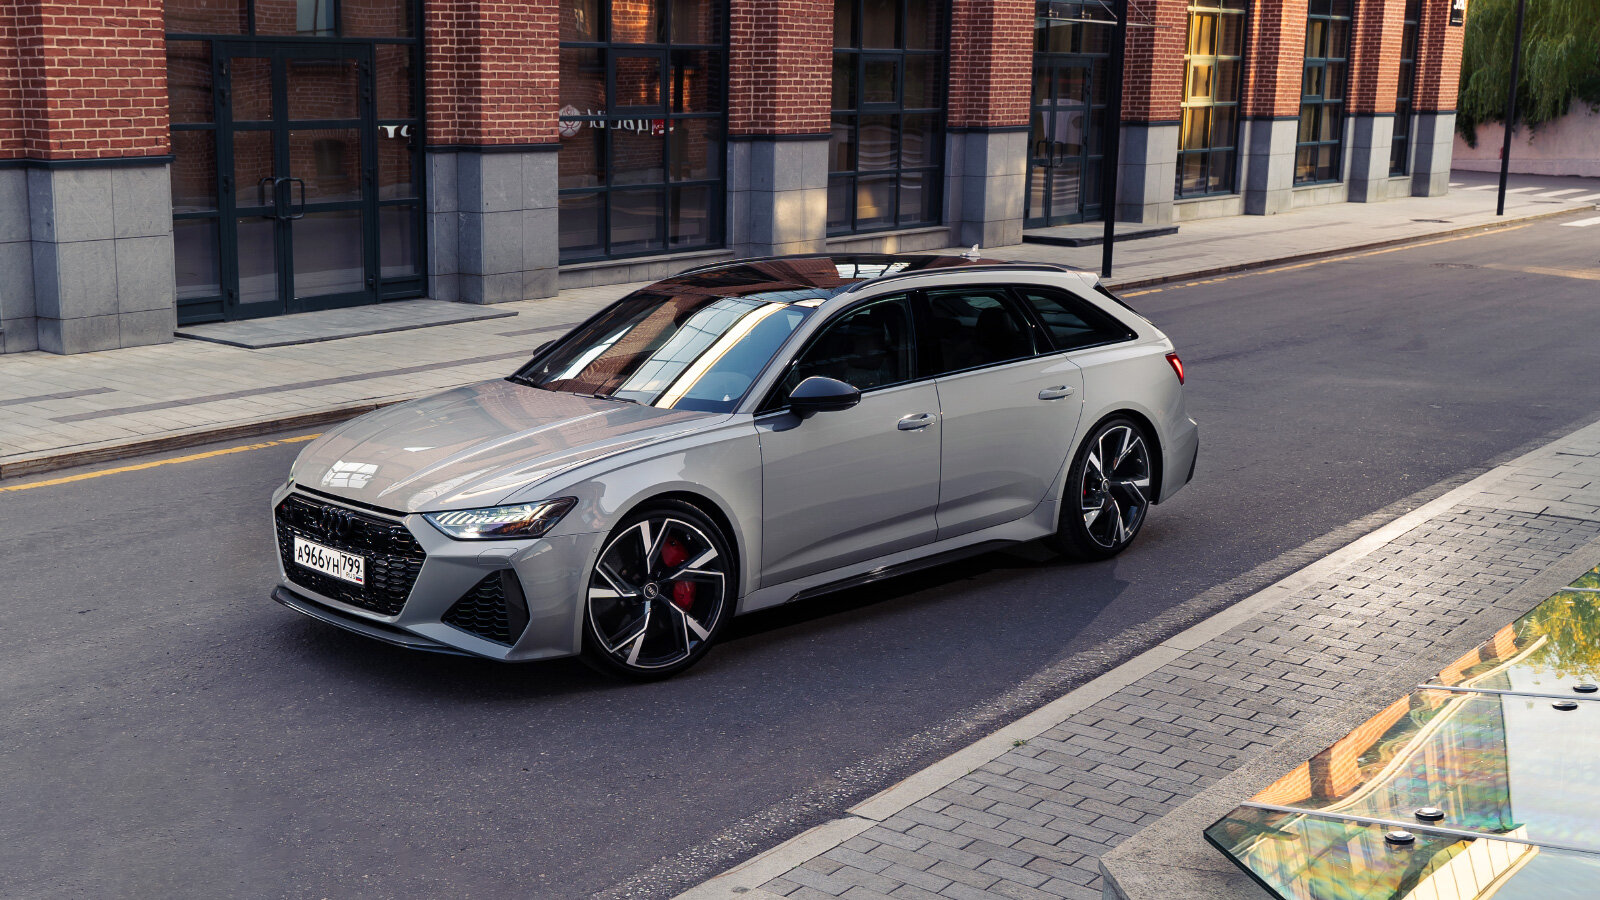 12 секунд из жизни универсала: дрэг-тест нового Audi RS 6